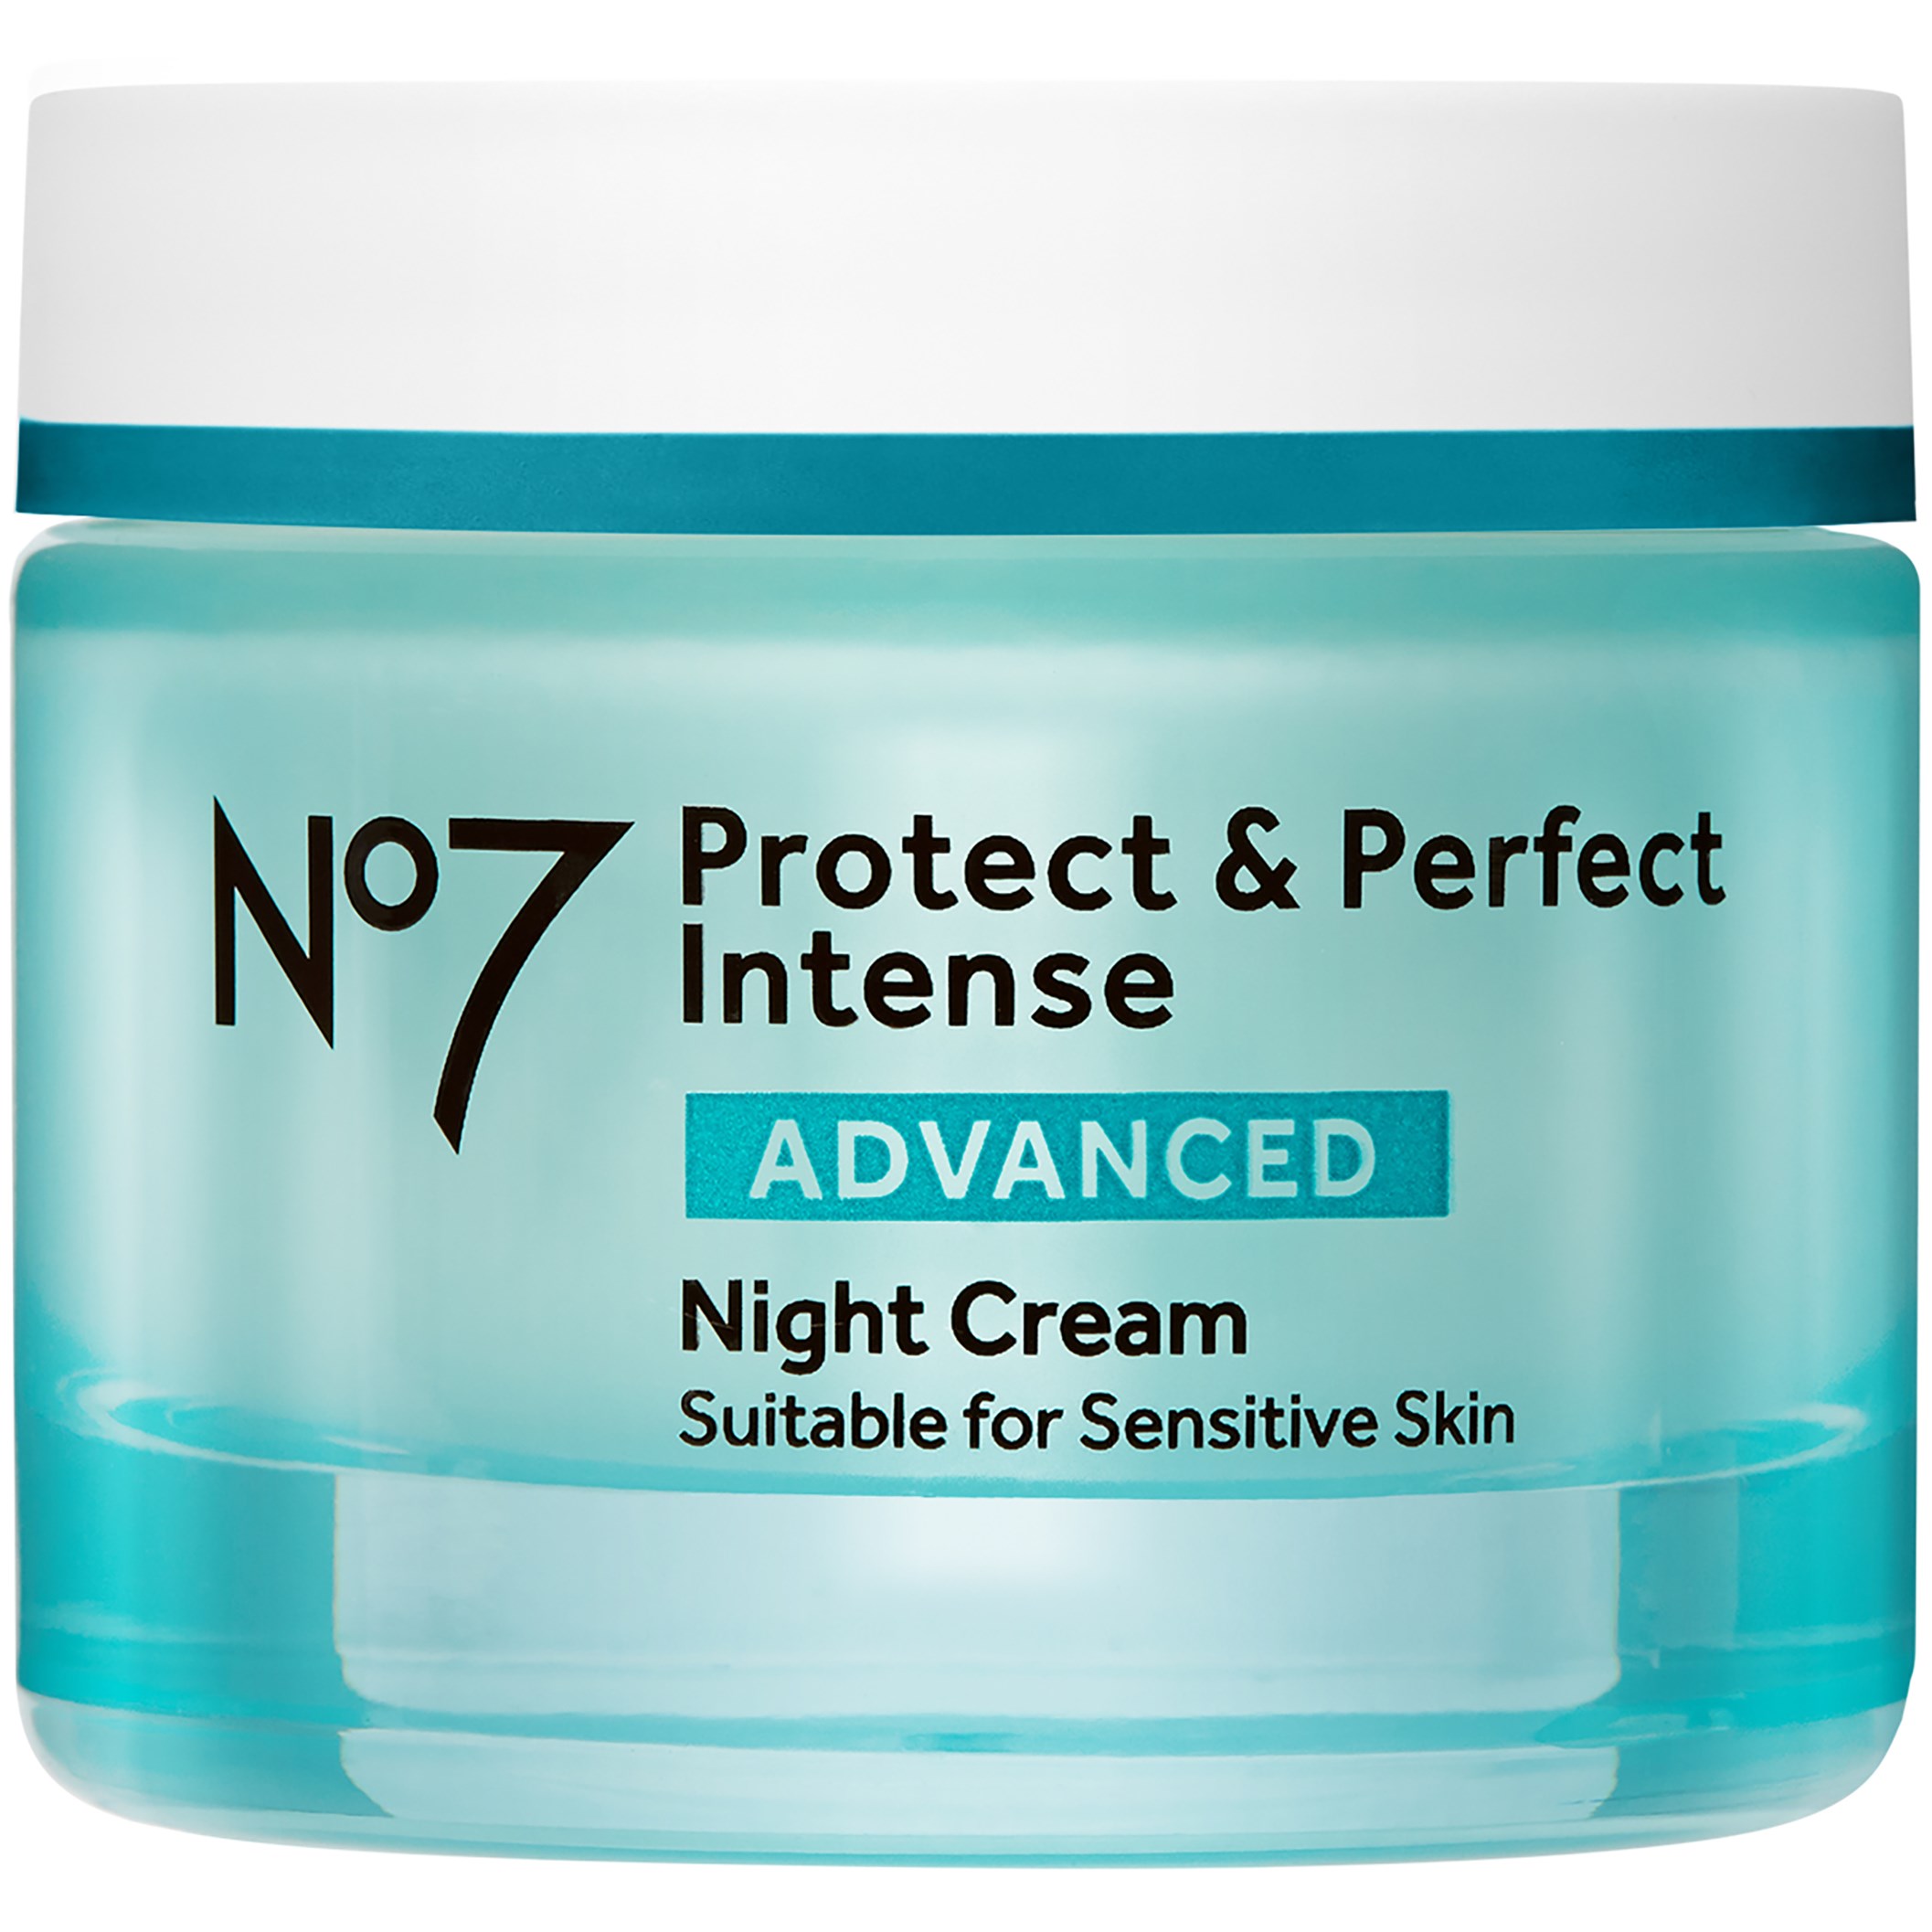 Bilde av No7 Protect & Perfect Intense Advanced Night Cream 50 Ml